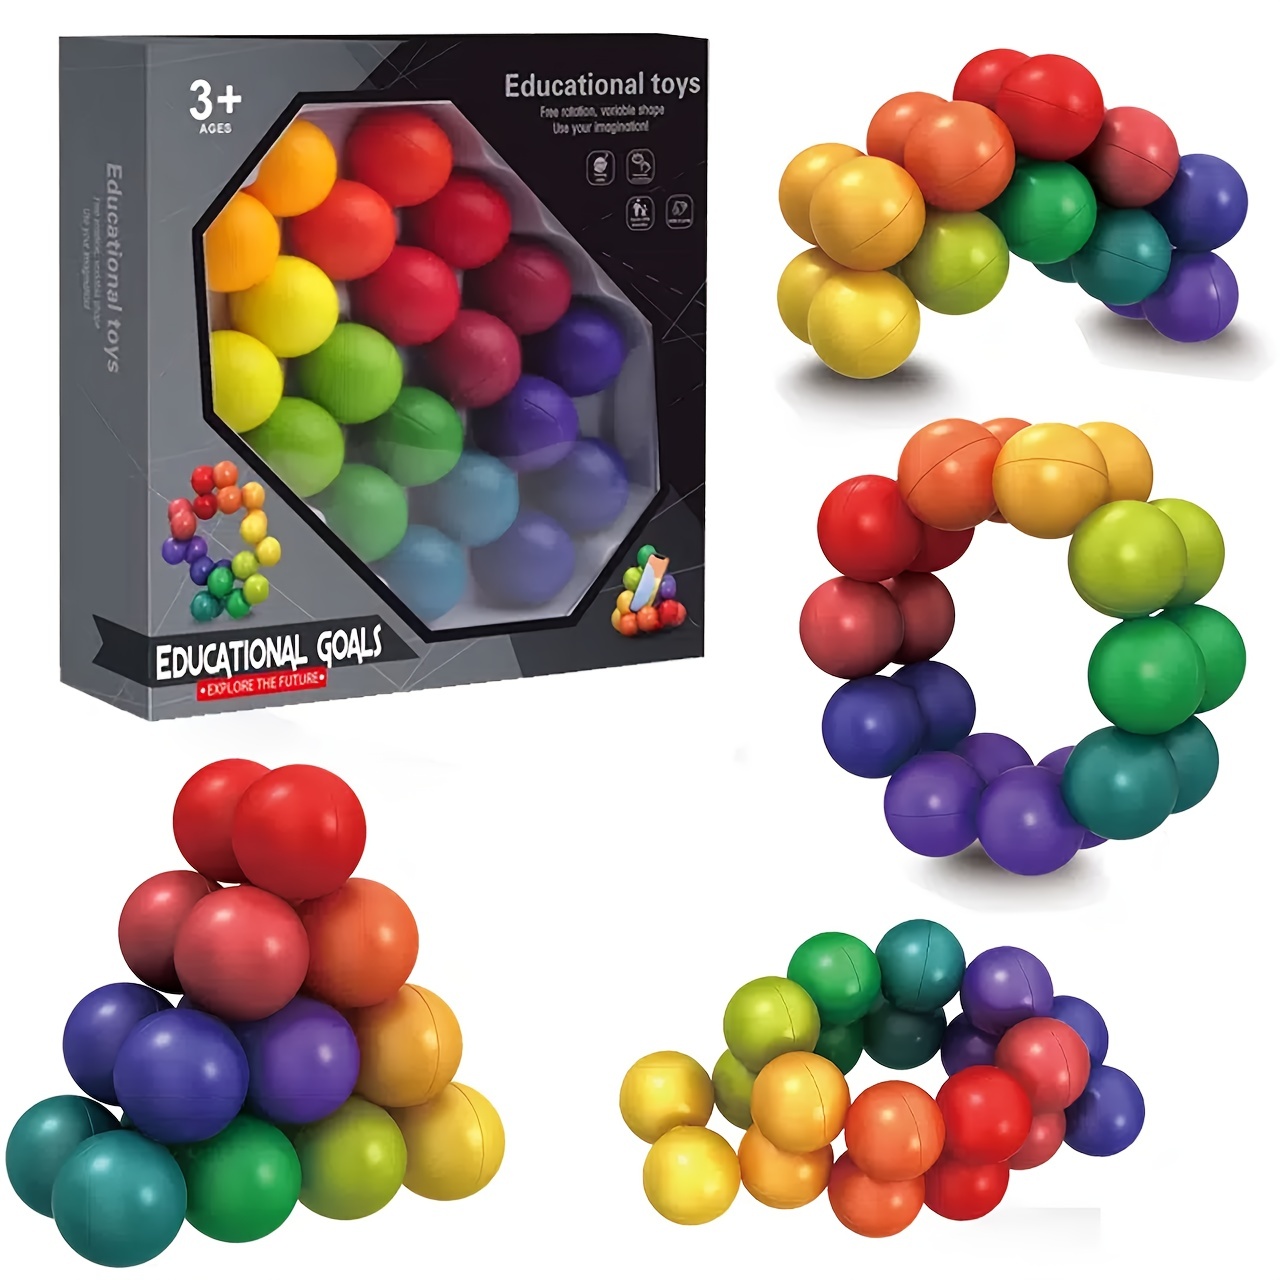 1pc Random Three-Dimensional Variety Magic Cube Anti Stress Toy, 5